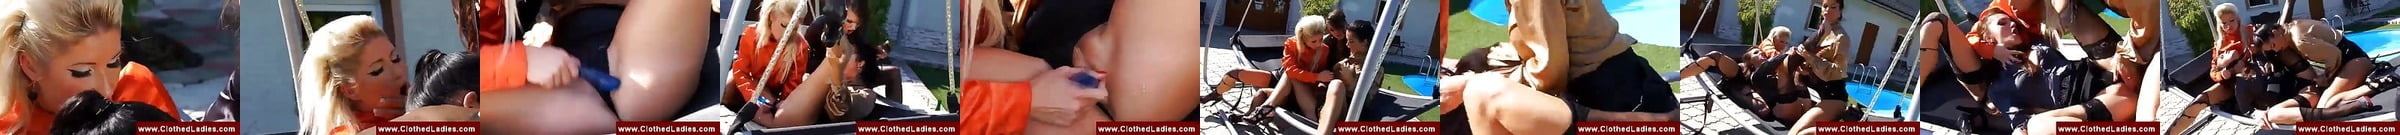 Girls Using Dildos Porn Videos XHamster